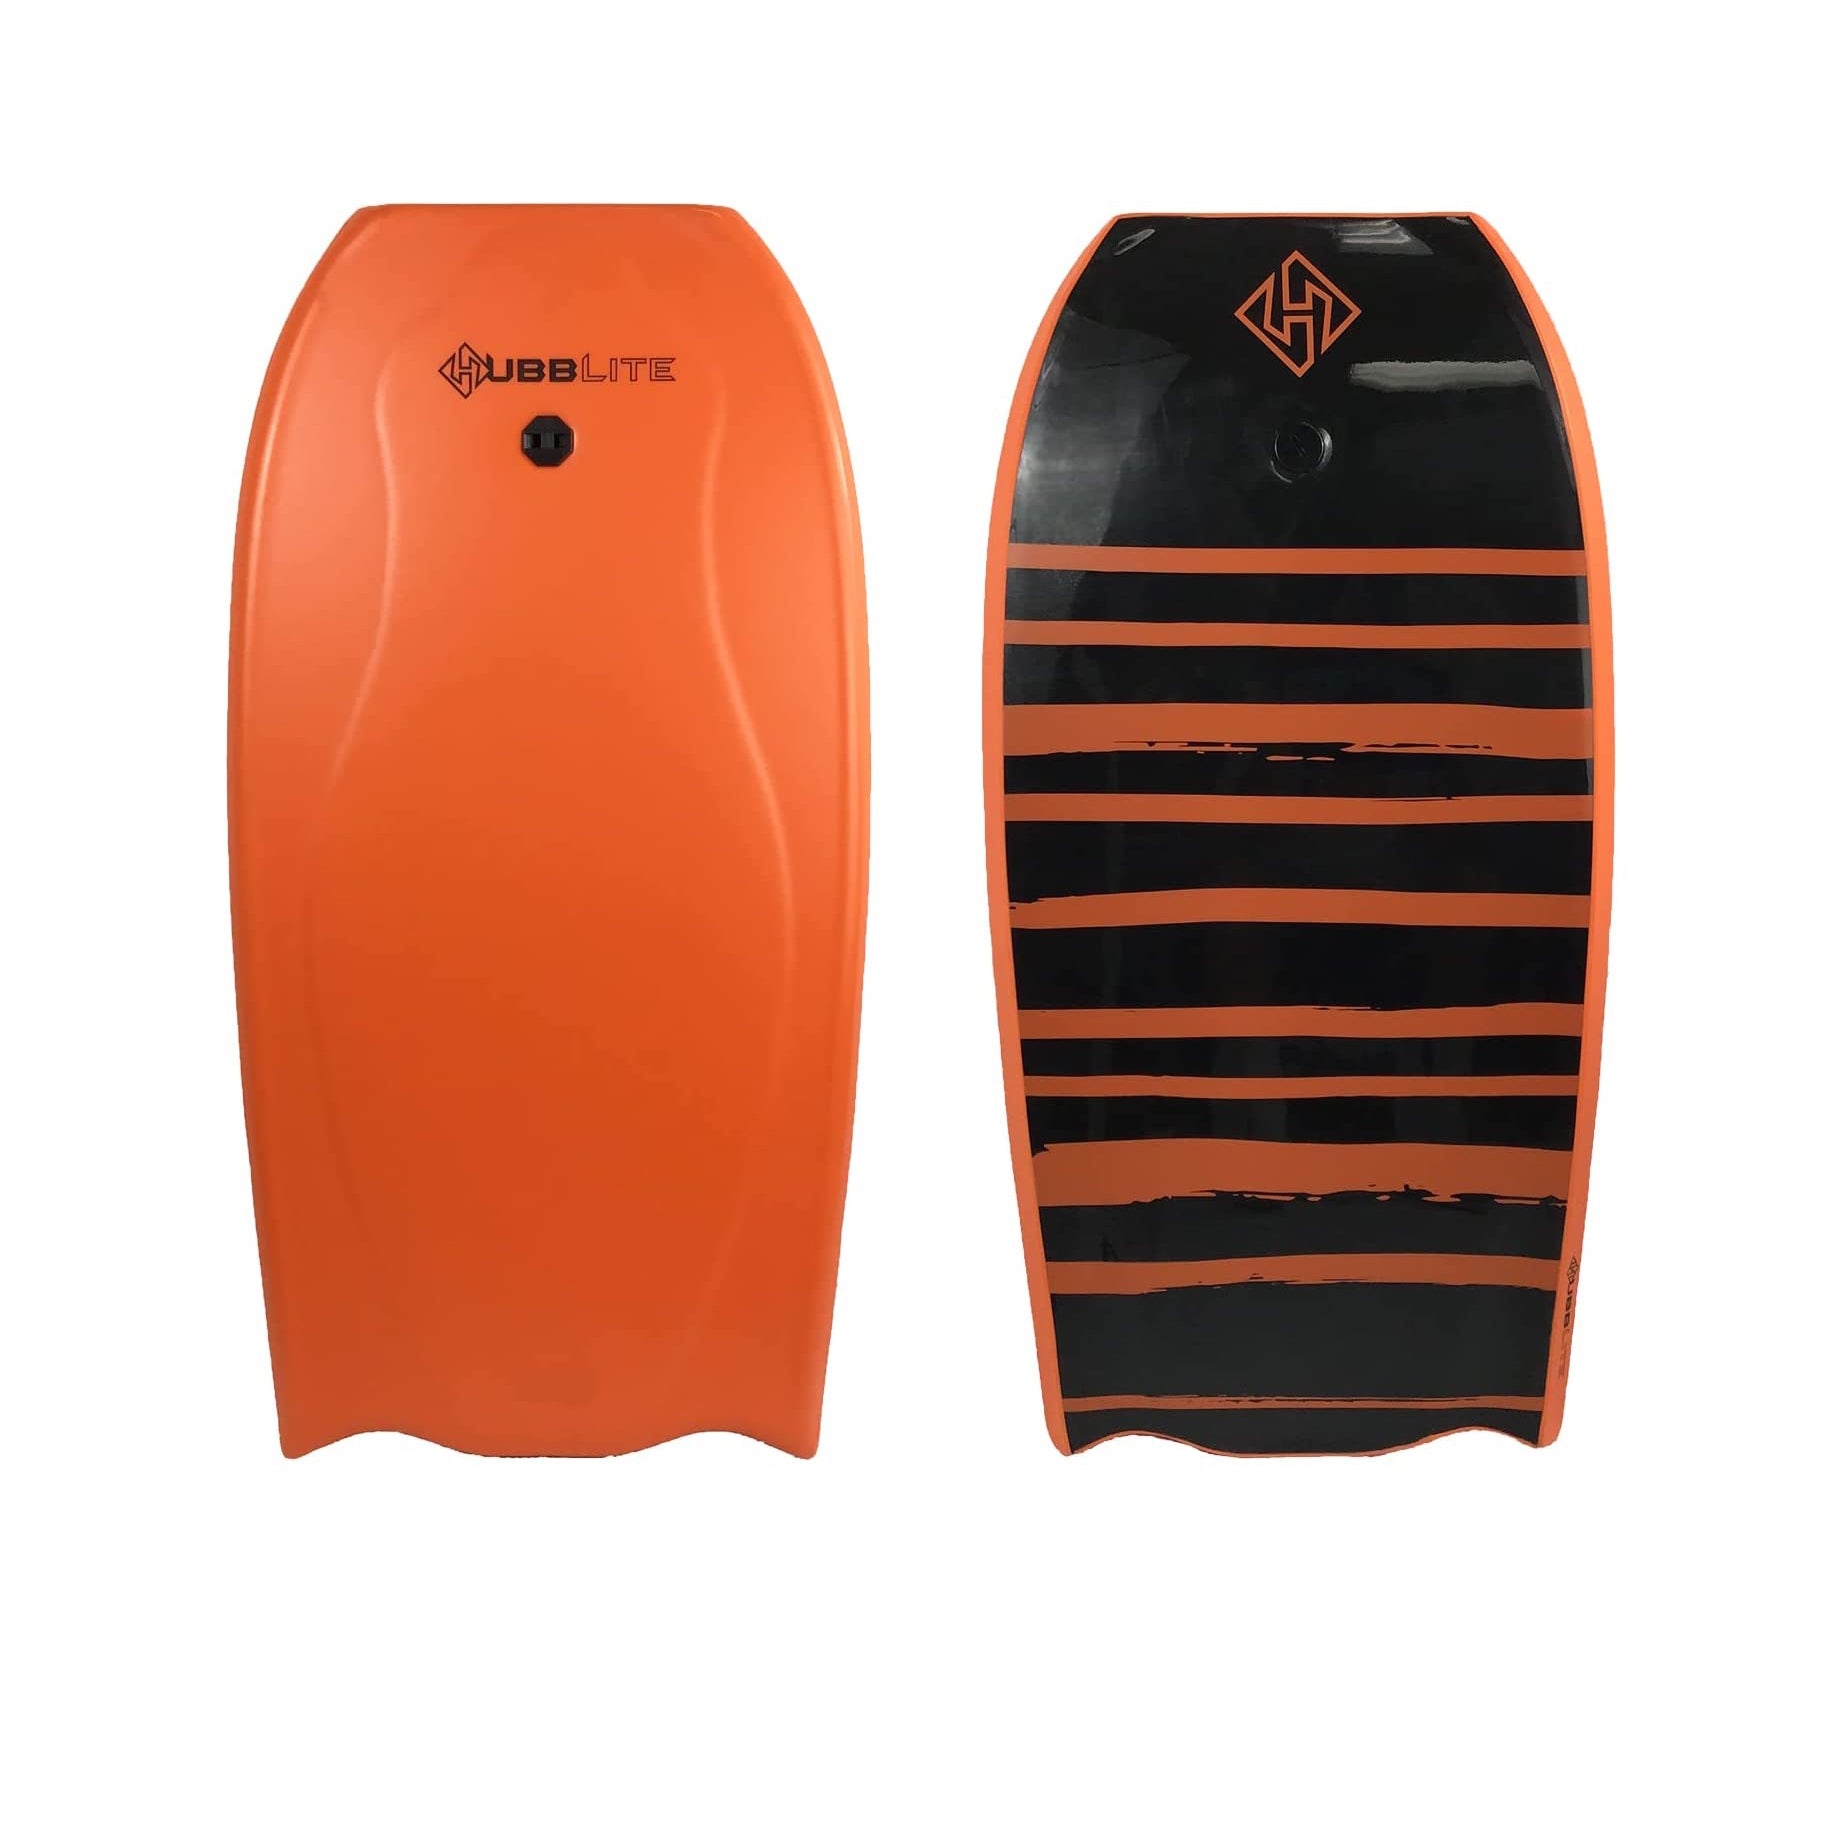 Hubboards Hubblite Bodyboard Orange-Orange-Black 36in